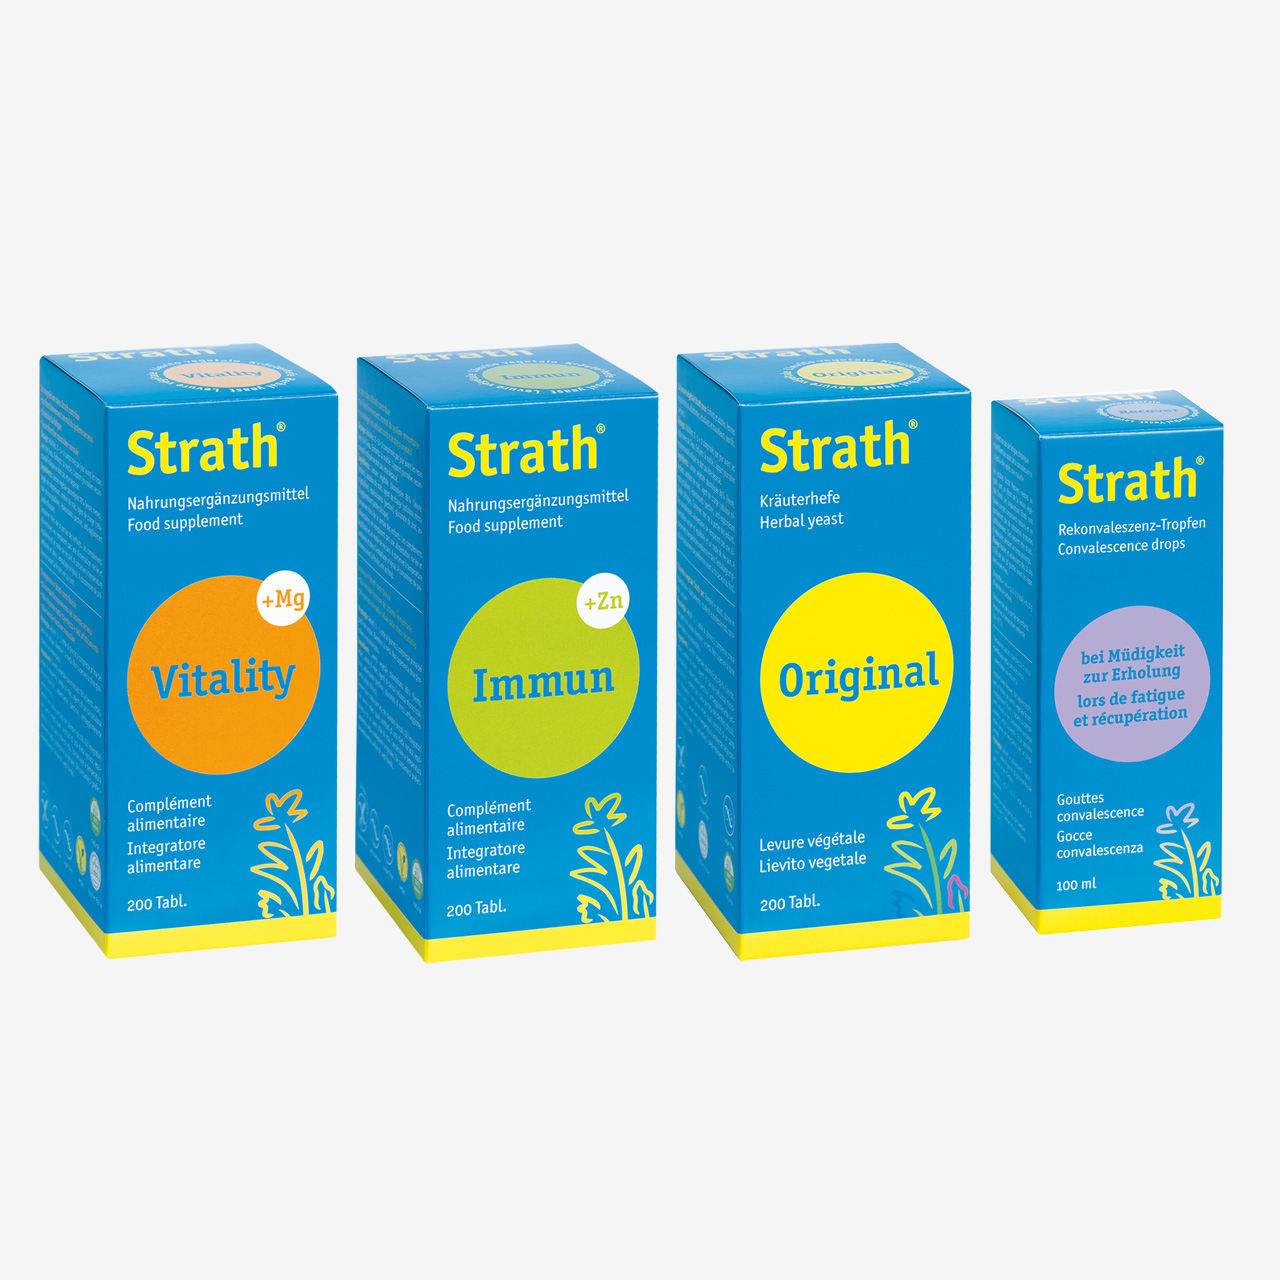 Bio Strath Verpackung Redesign